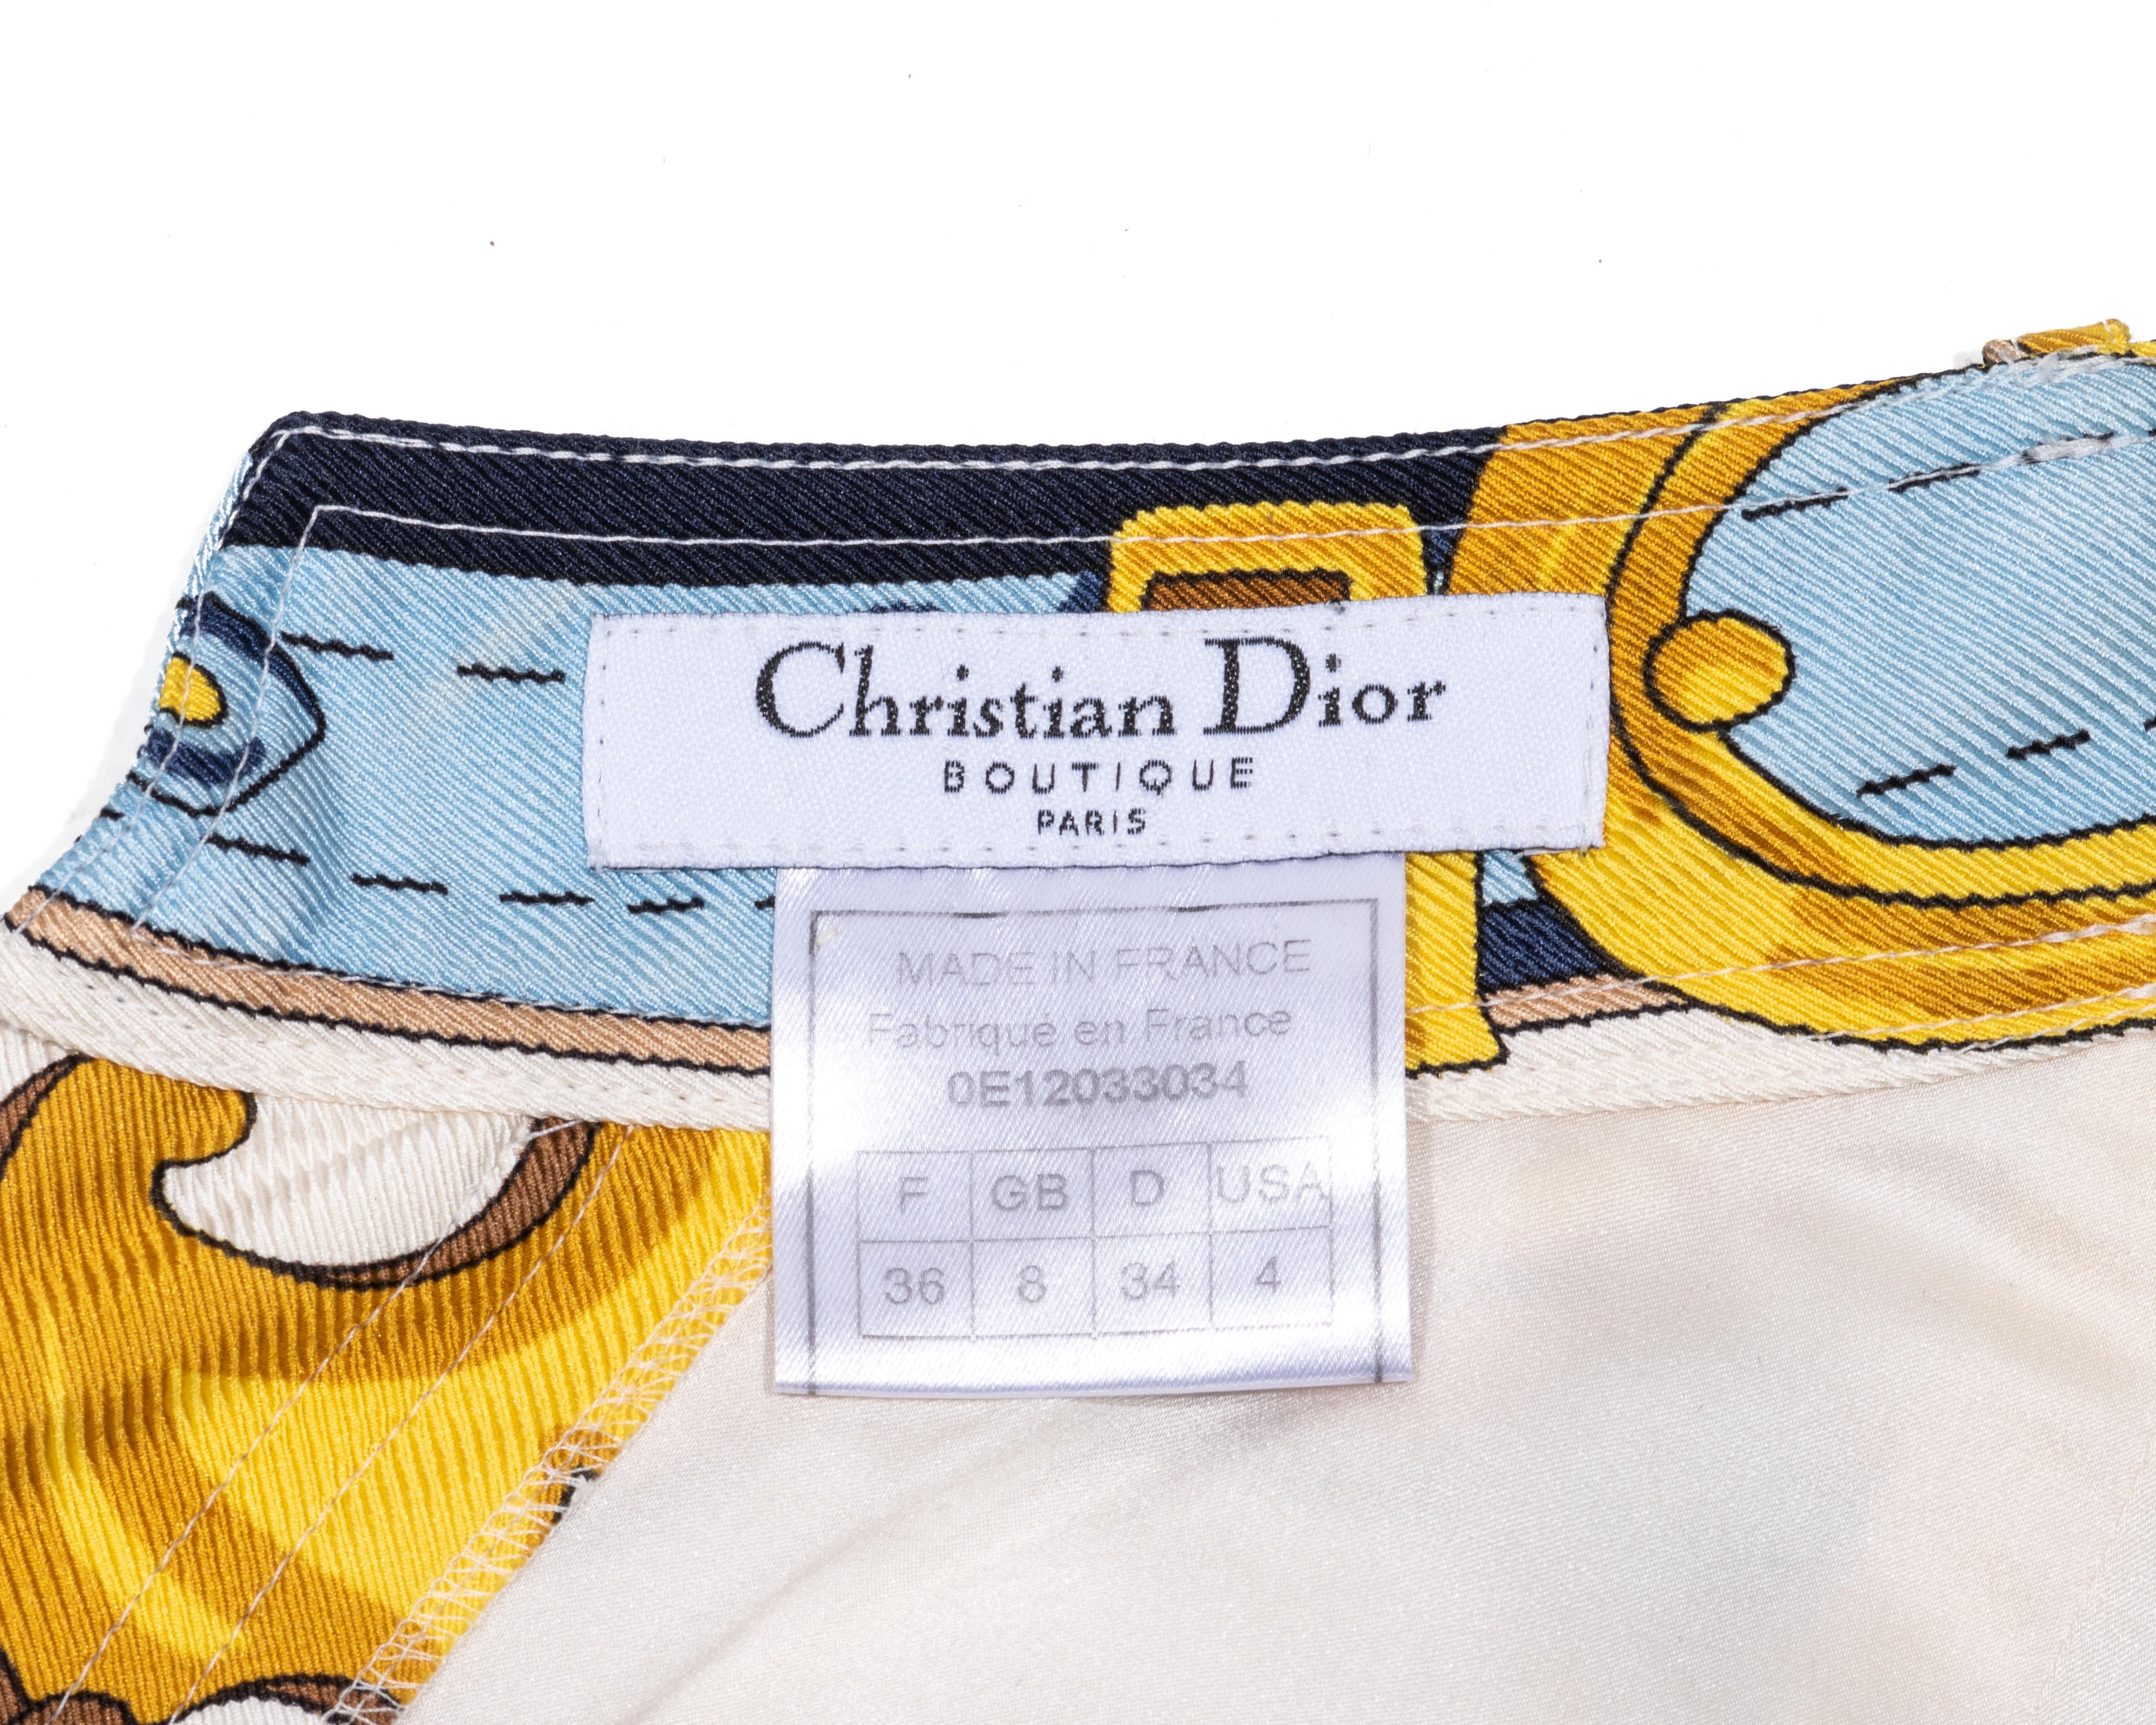 Christian Dior by John Galliano skirt, top and belt ensemble, ss 2000 7